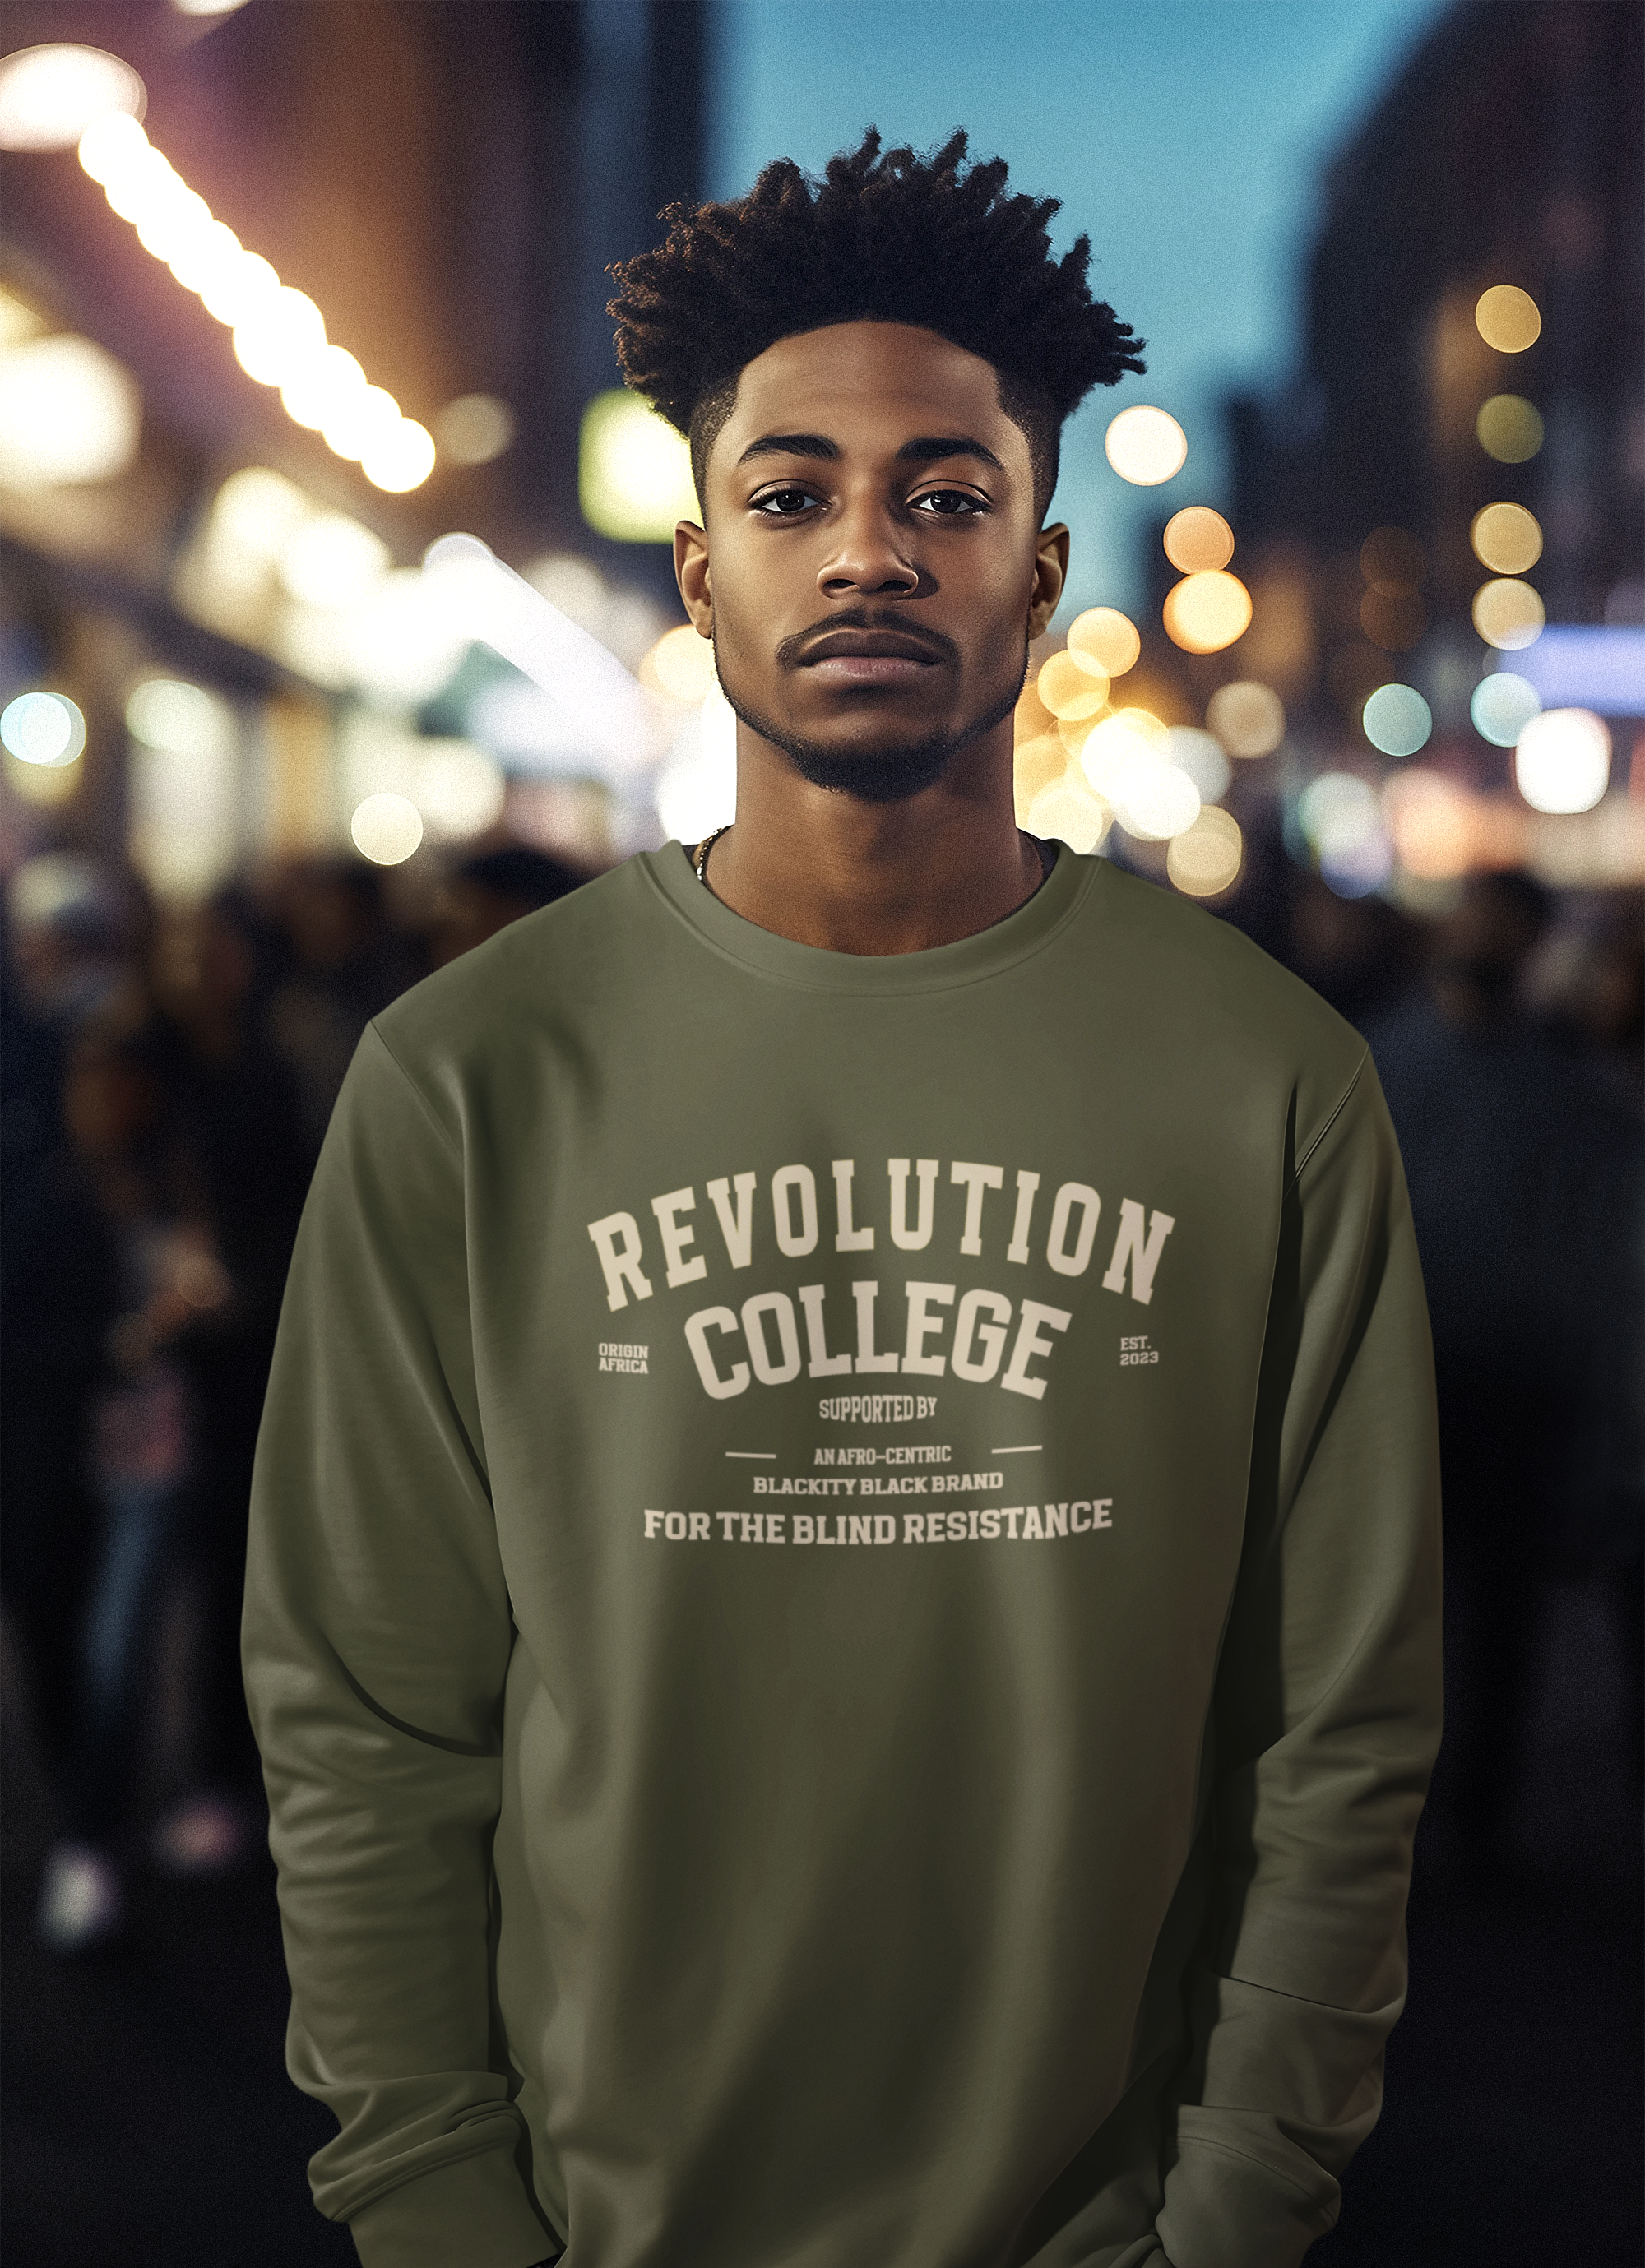 Revolution College Long-Sleeved Unisex Shirt